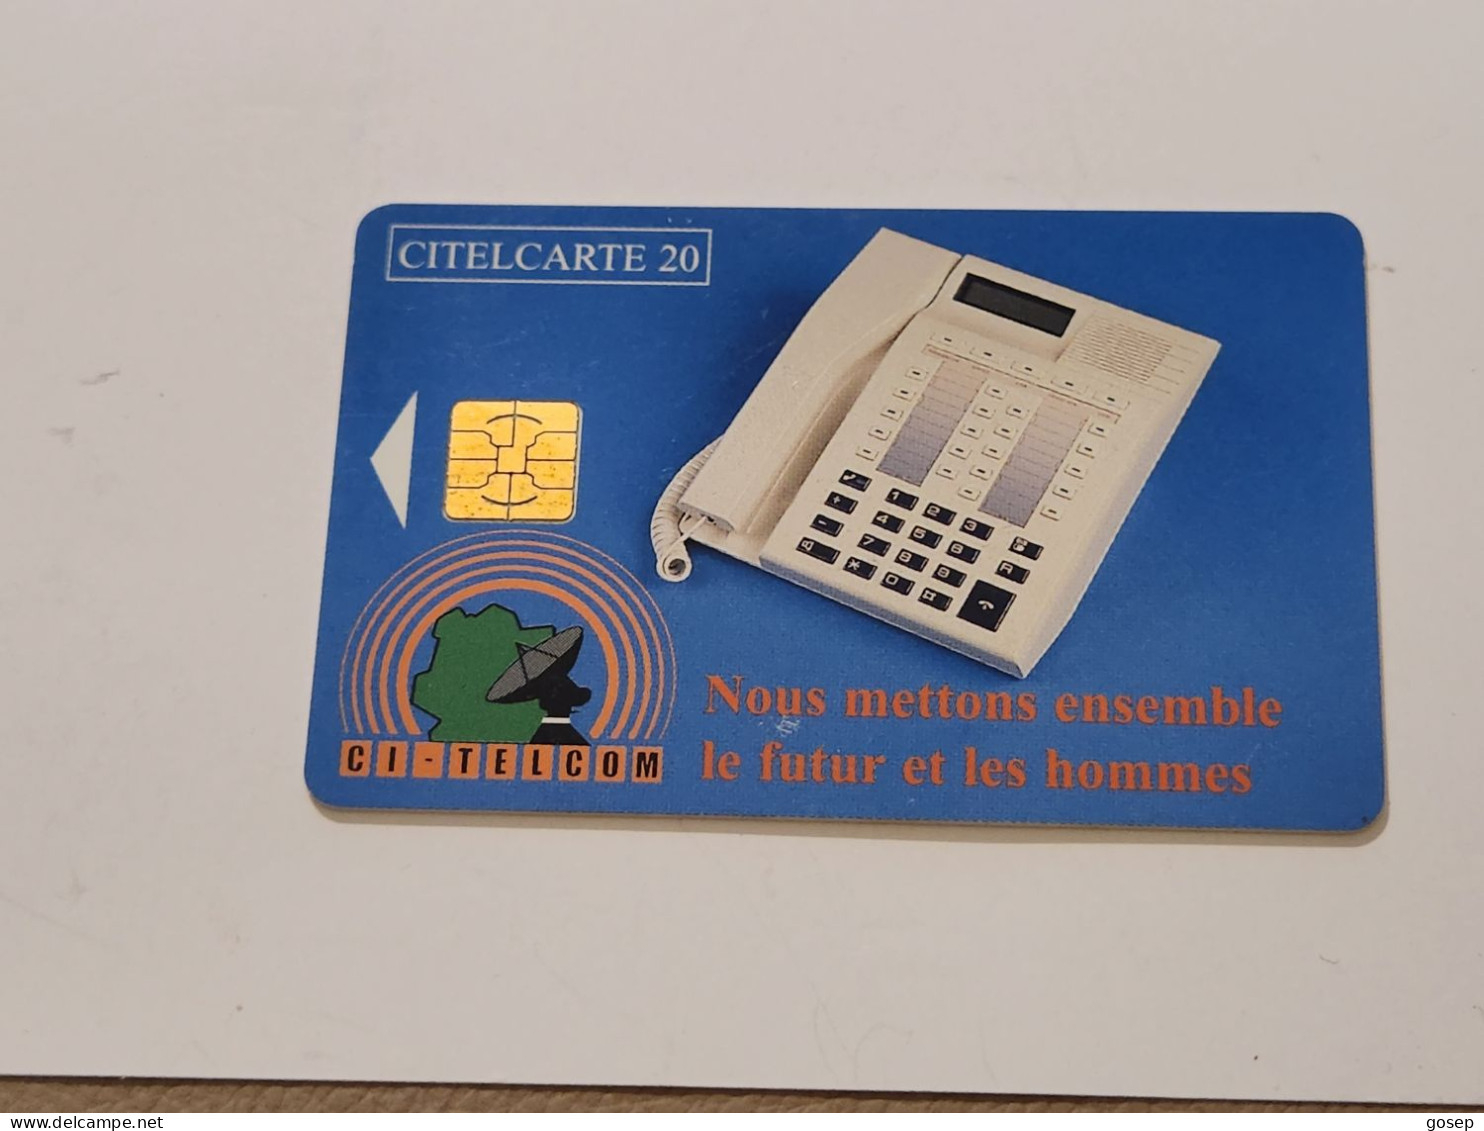 Ivory Coast-CI-CIT-0019)-telephone Nous-(34)-(20units)-(000190476)-(tirage-150.000)-used Card+1card Prepiad Free - Costa De Marfil